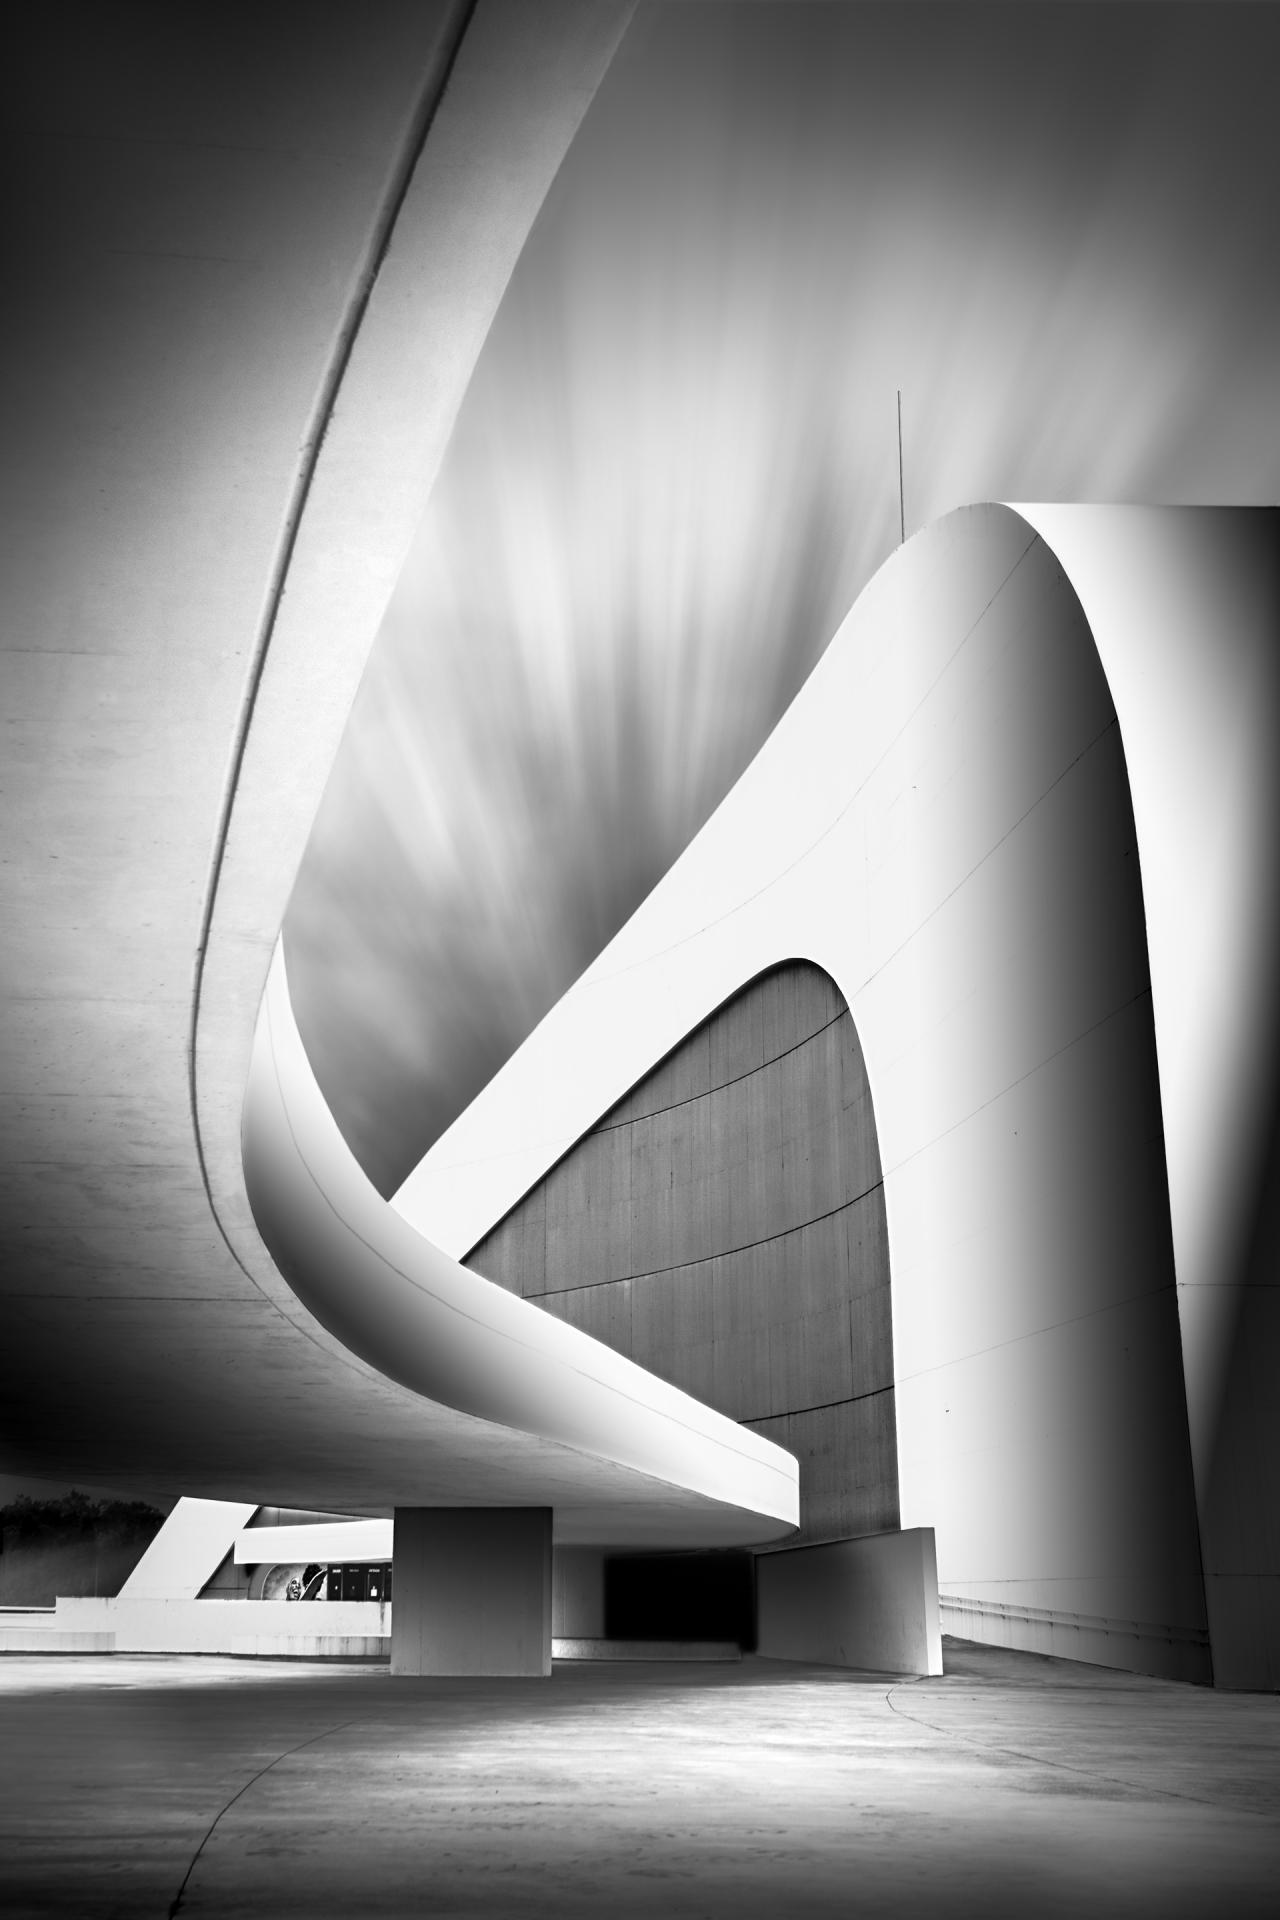 New York Photography Awards Winner - Niemeyer